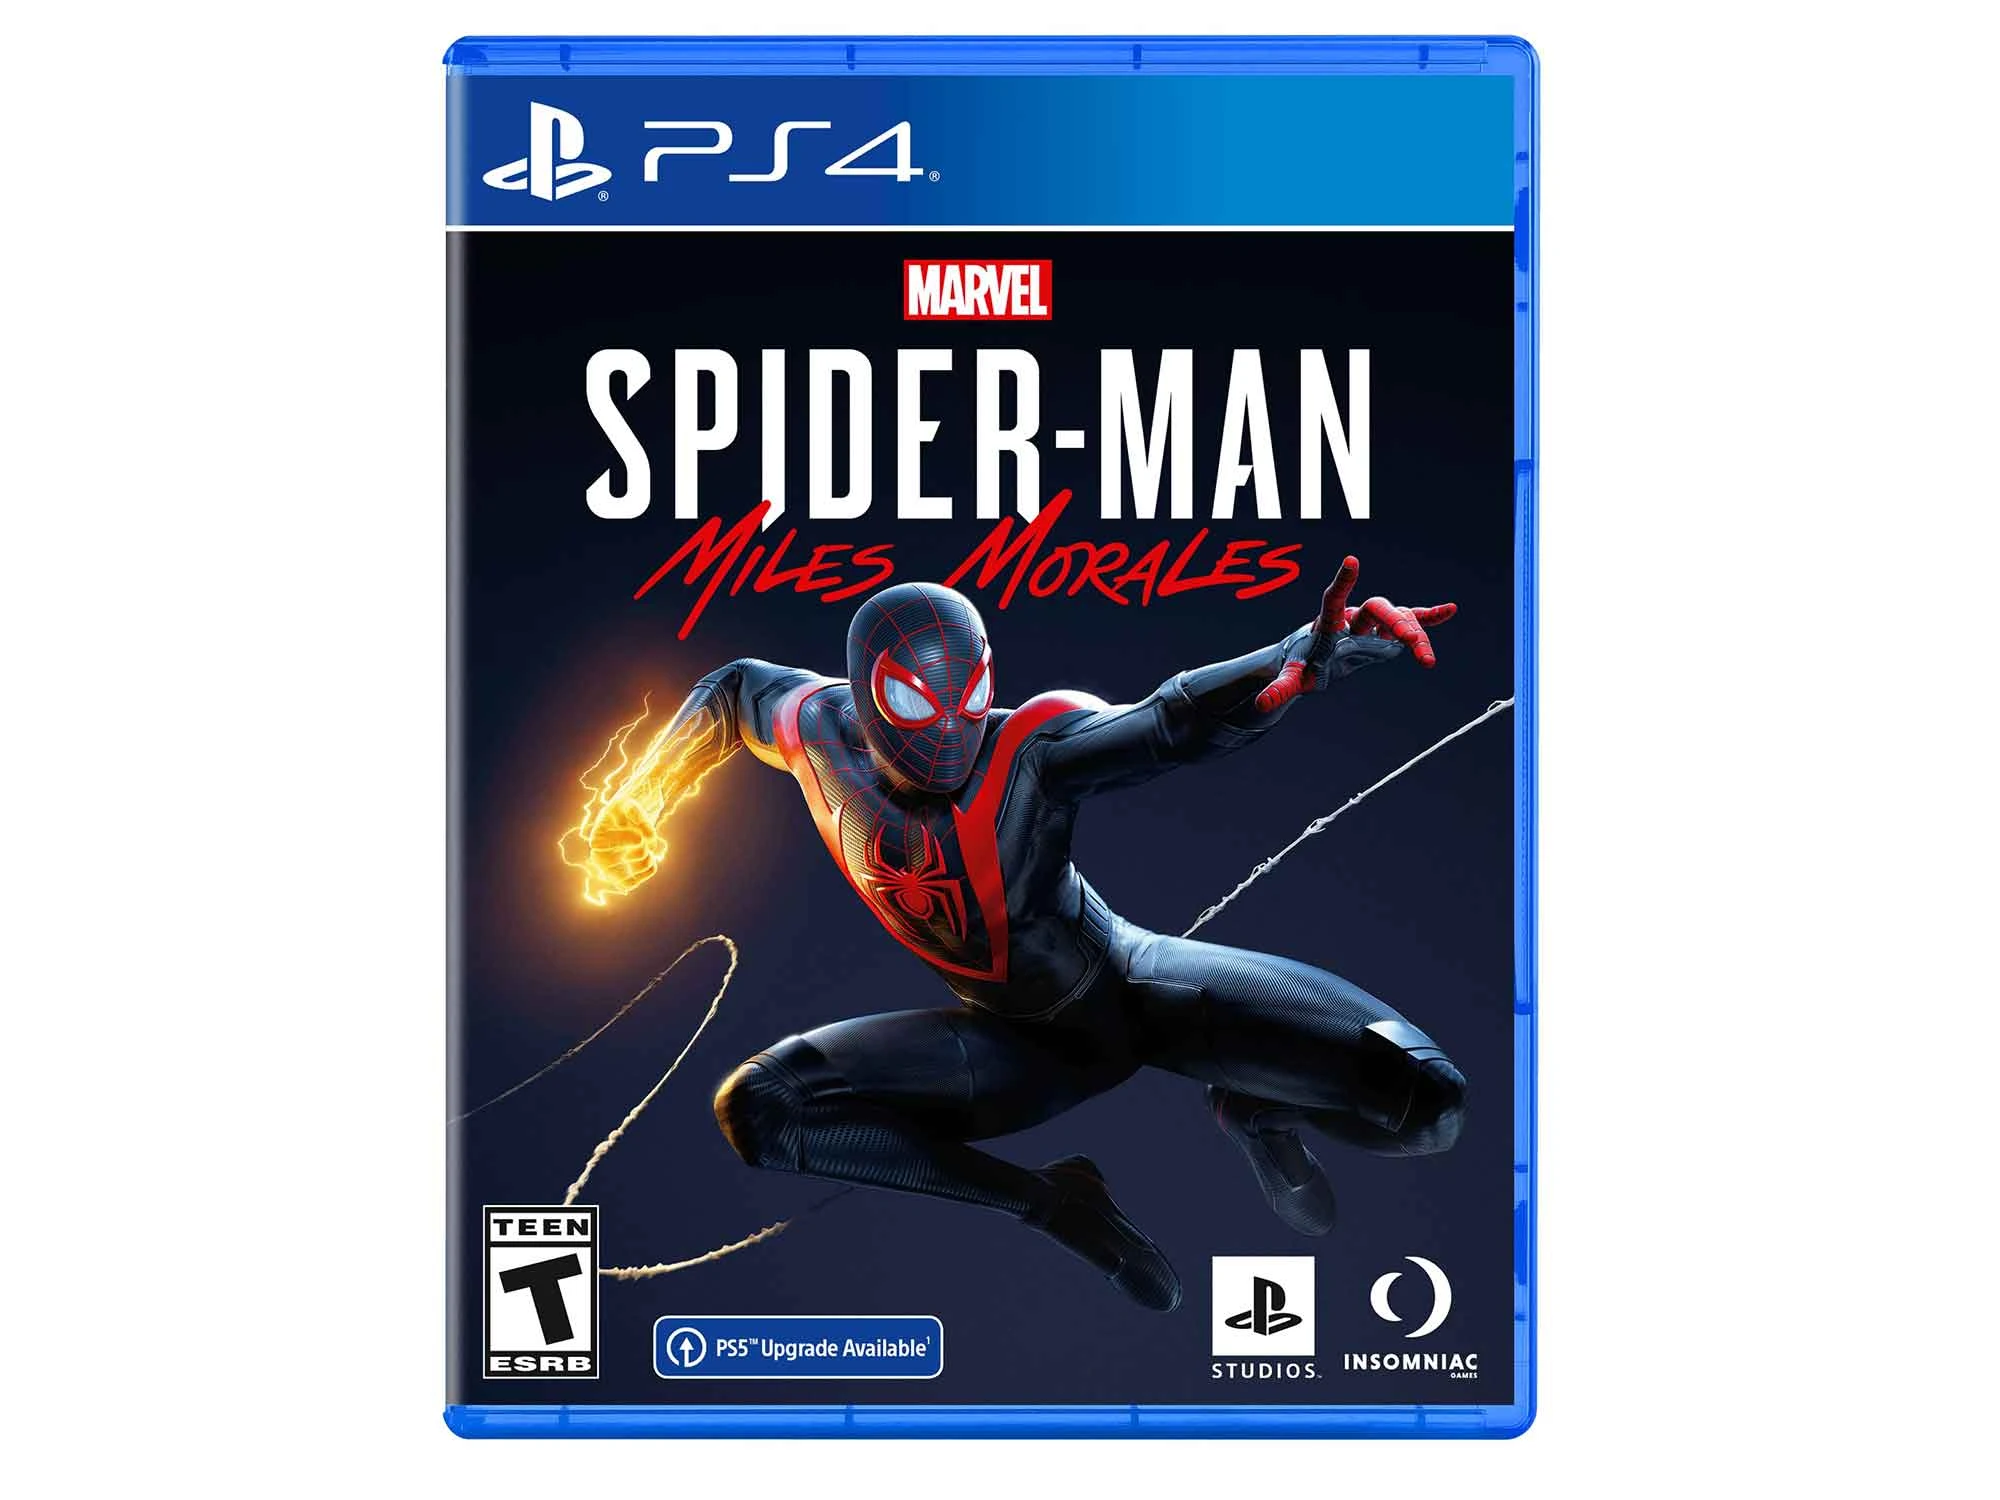 PLAYSTATION PS4 SPIDER-MAN MILES MORALES